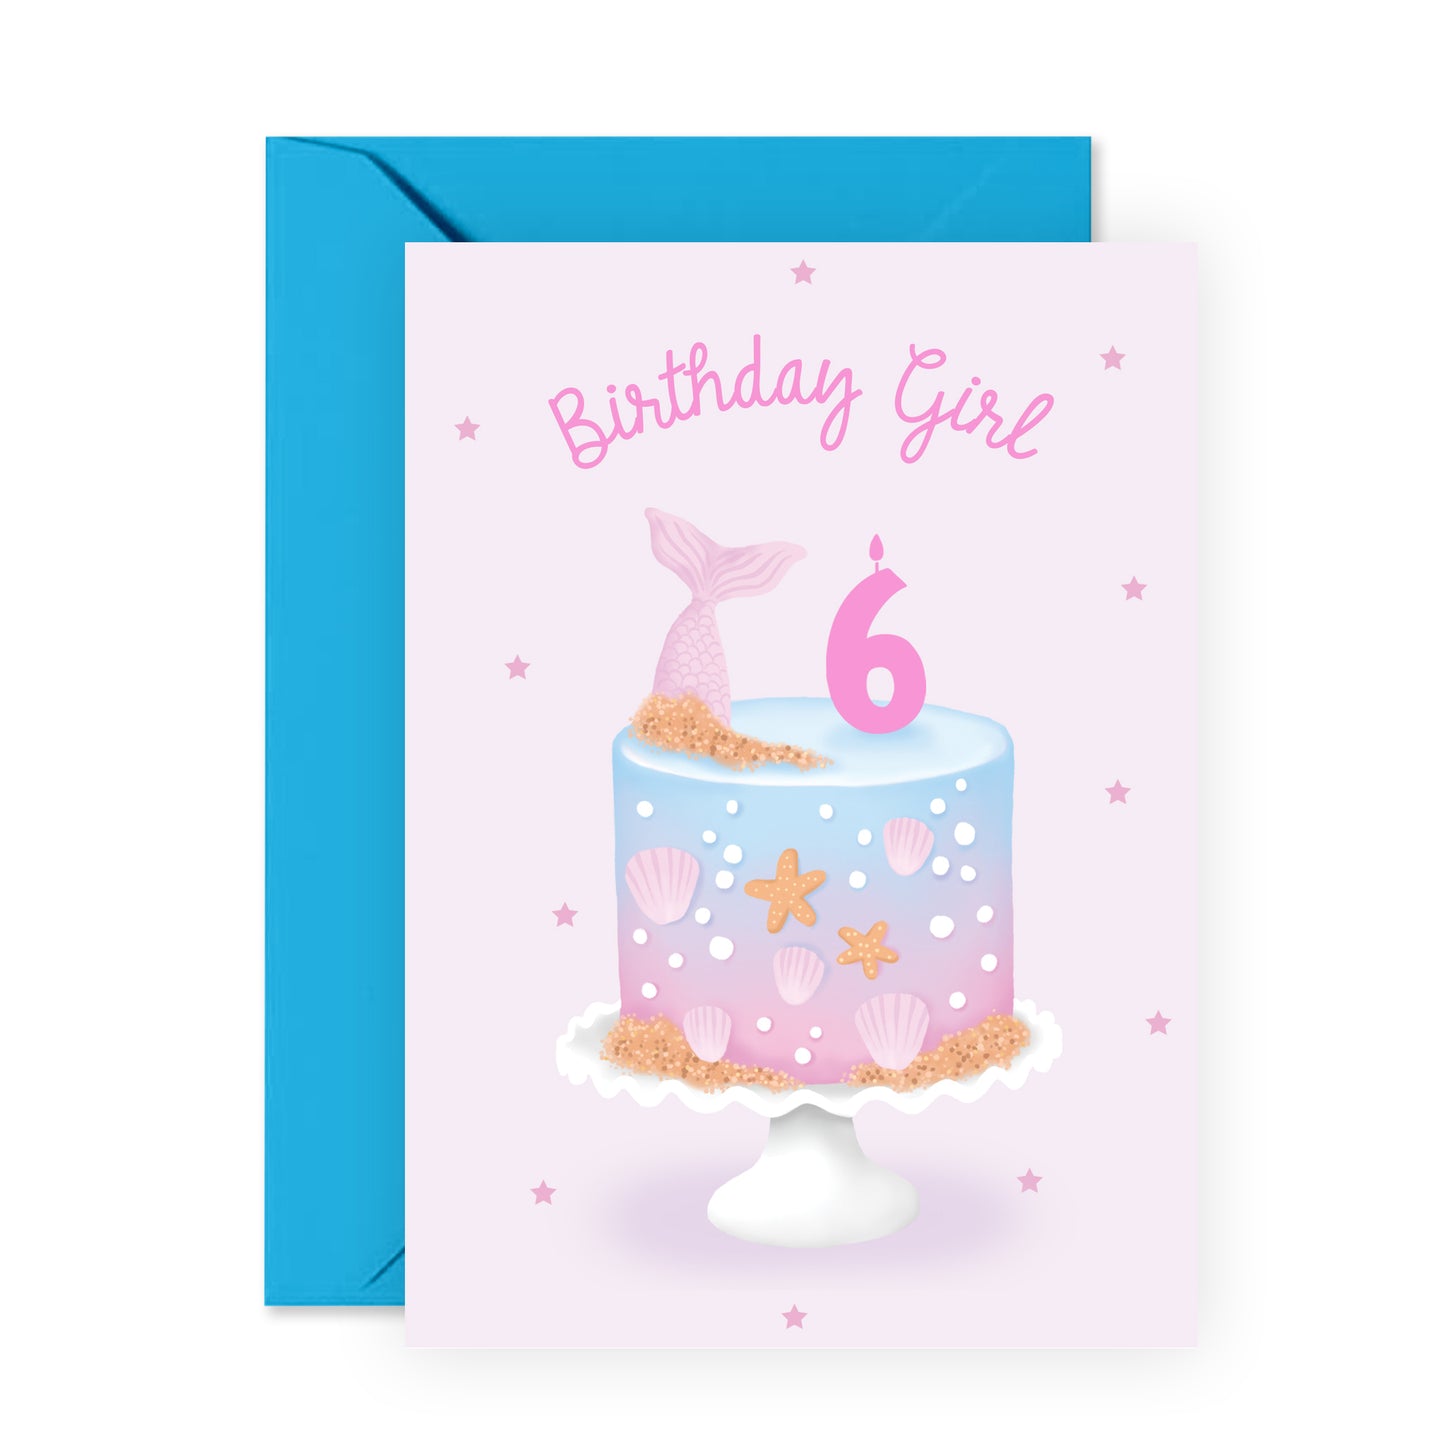 6th Birthday Card - Birthday Girl Six - For Kids Girls Daughter Granddaughter